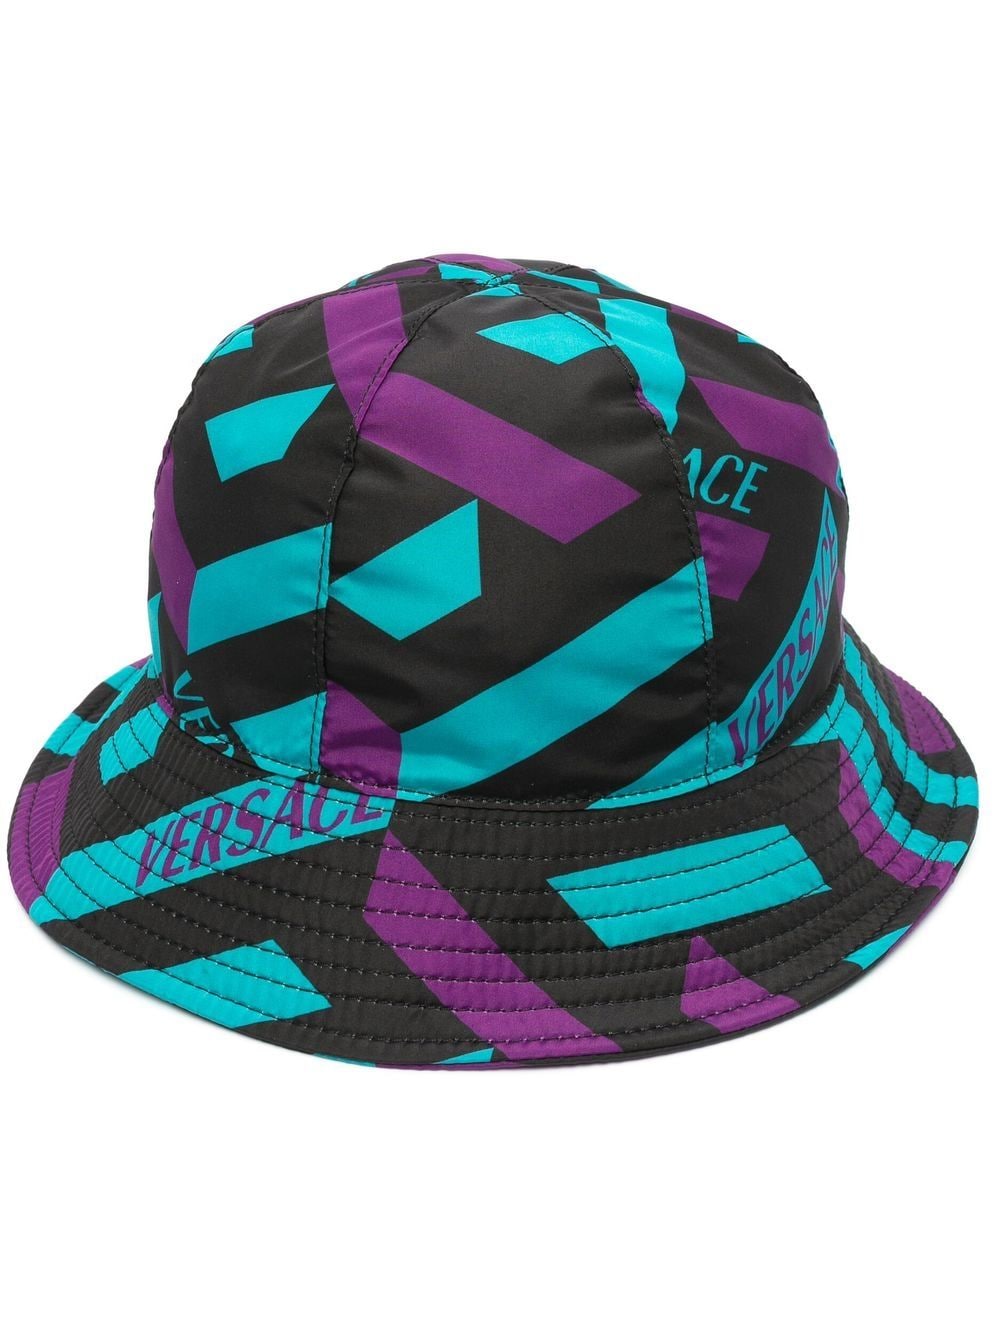 Versace geometric logo print bucket hat - Black